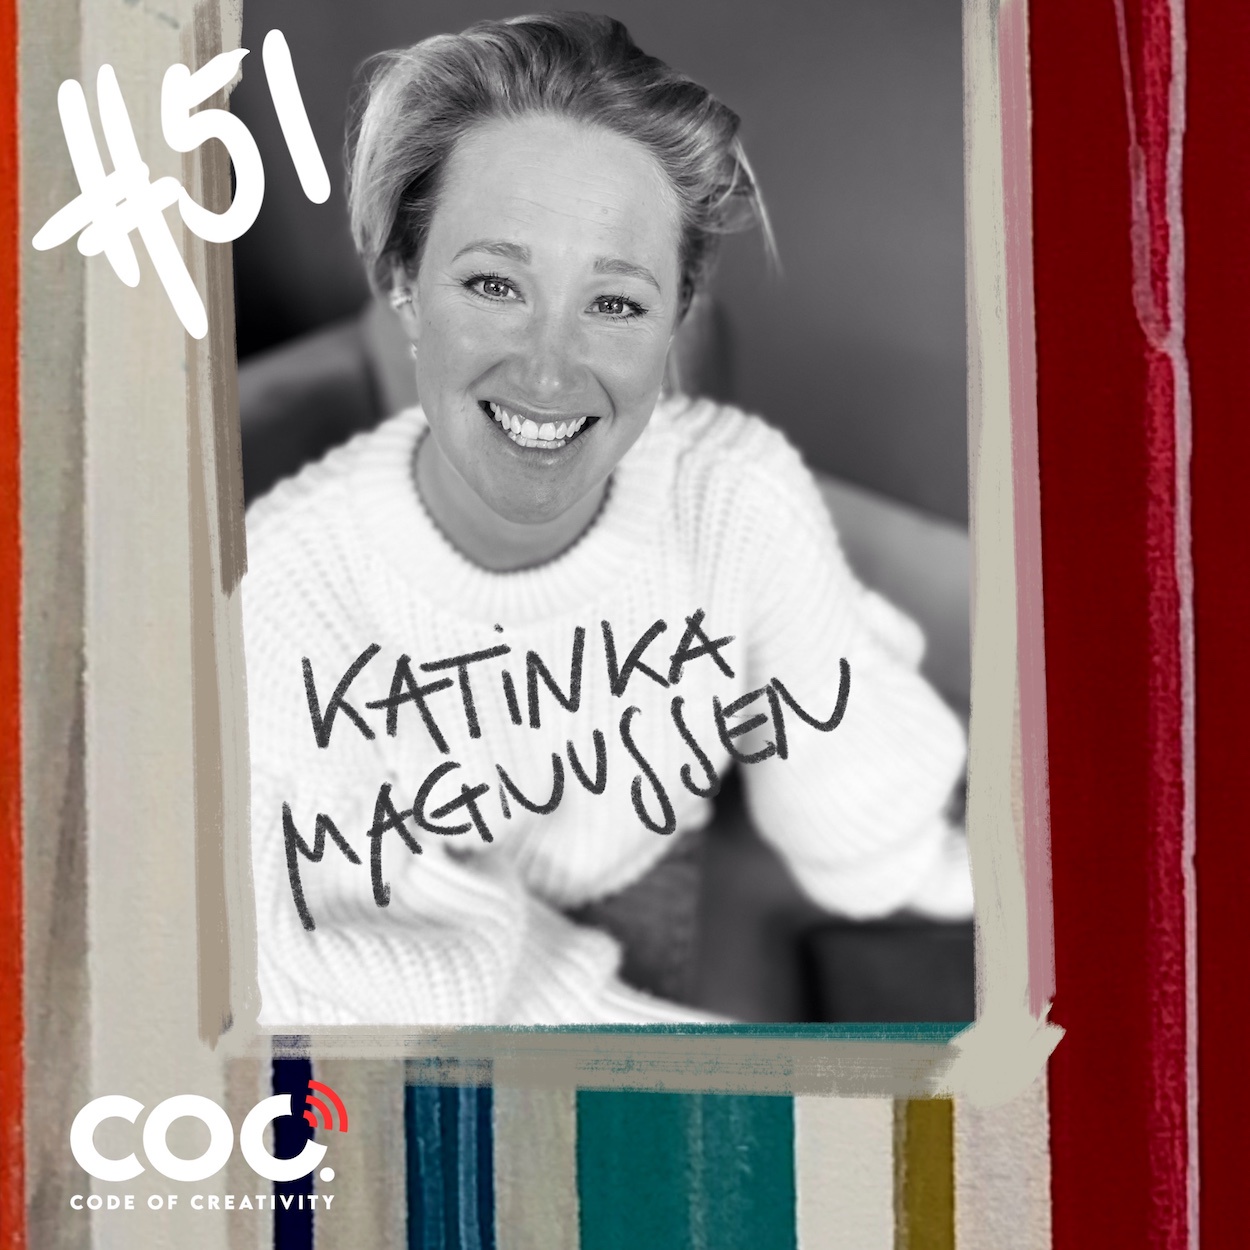 #51 Katinka Magnussen - Podcasterin - Brandingexpertin - Modedesignerin